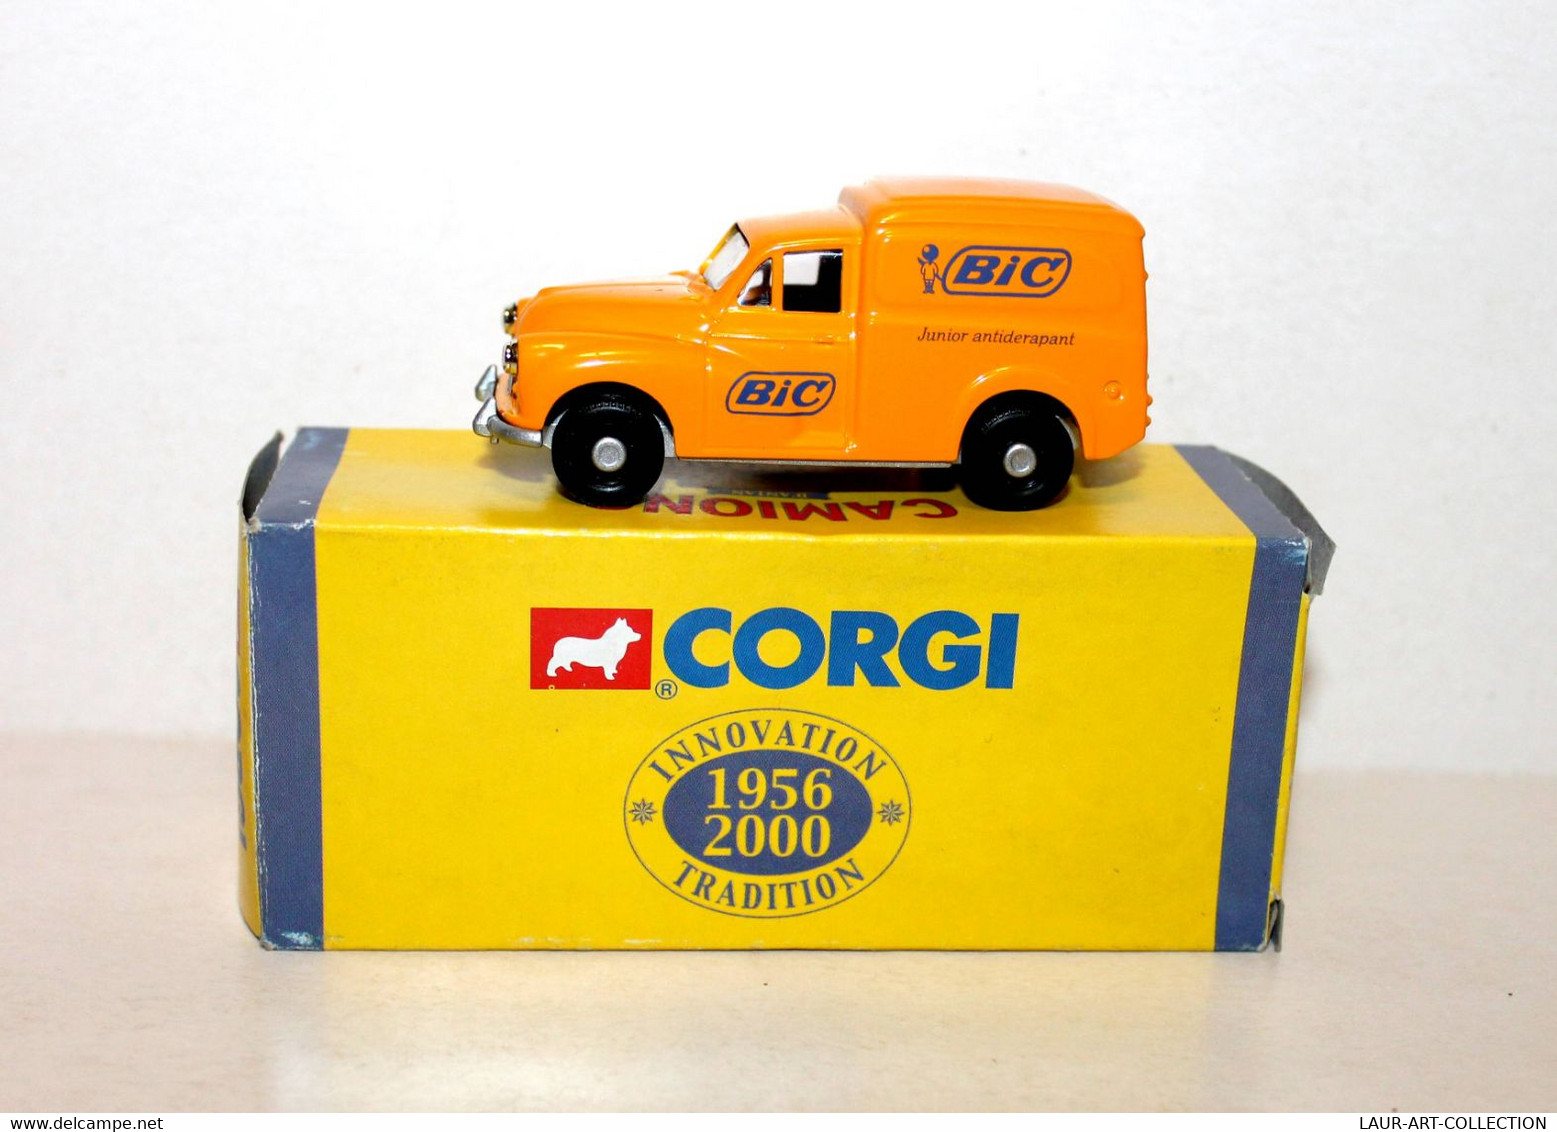 CORGI - CAMIONNETTE MORRIS MINOR VAN, PUB BIC CAMION D'ANTAN TRADITION 1956-2000 - AUTOMOBILE MINIATURE (2811.22) - Corgi Toys